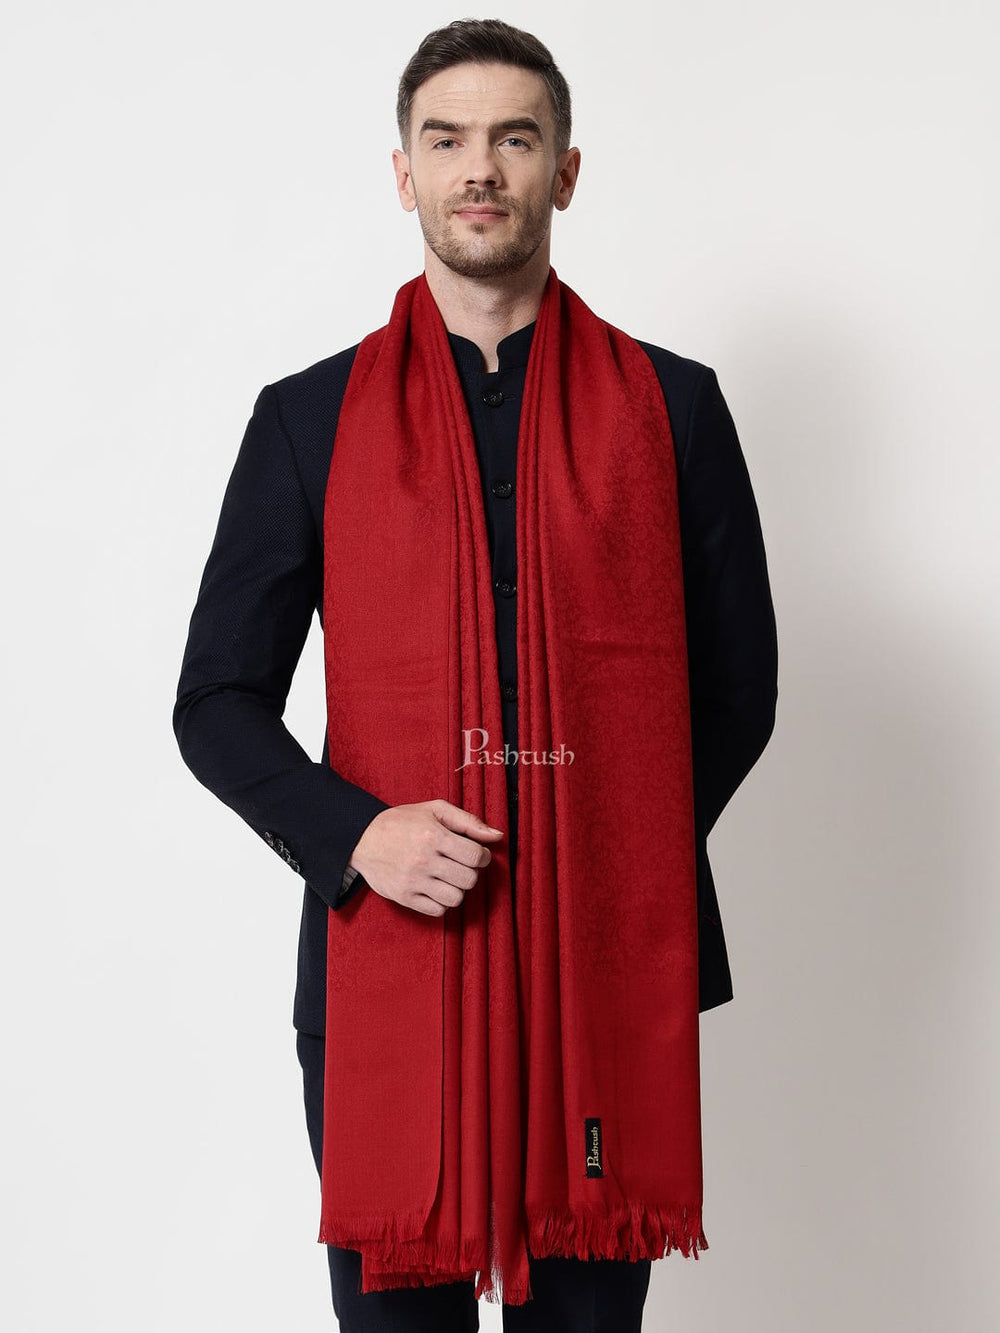 Pashtush India Mens Scarves Stoles and Mufflers Pashtush mens Fine Wool stole, jacquard design, Maroon